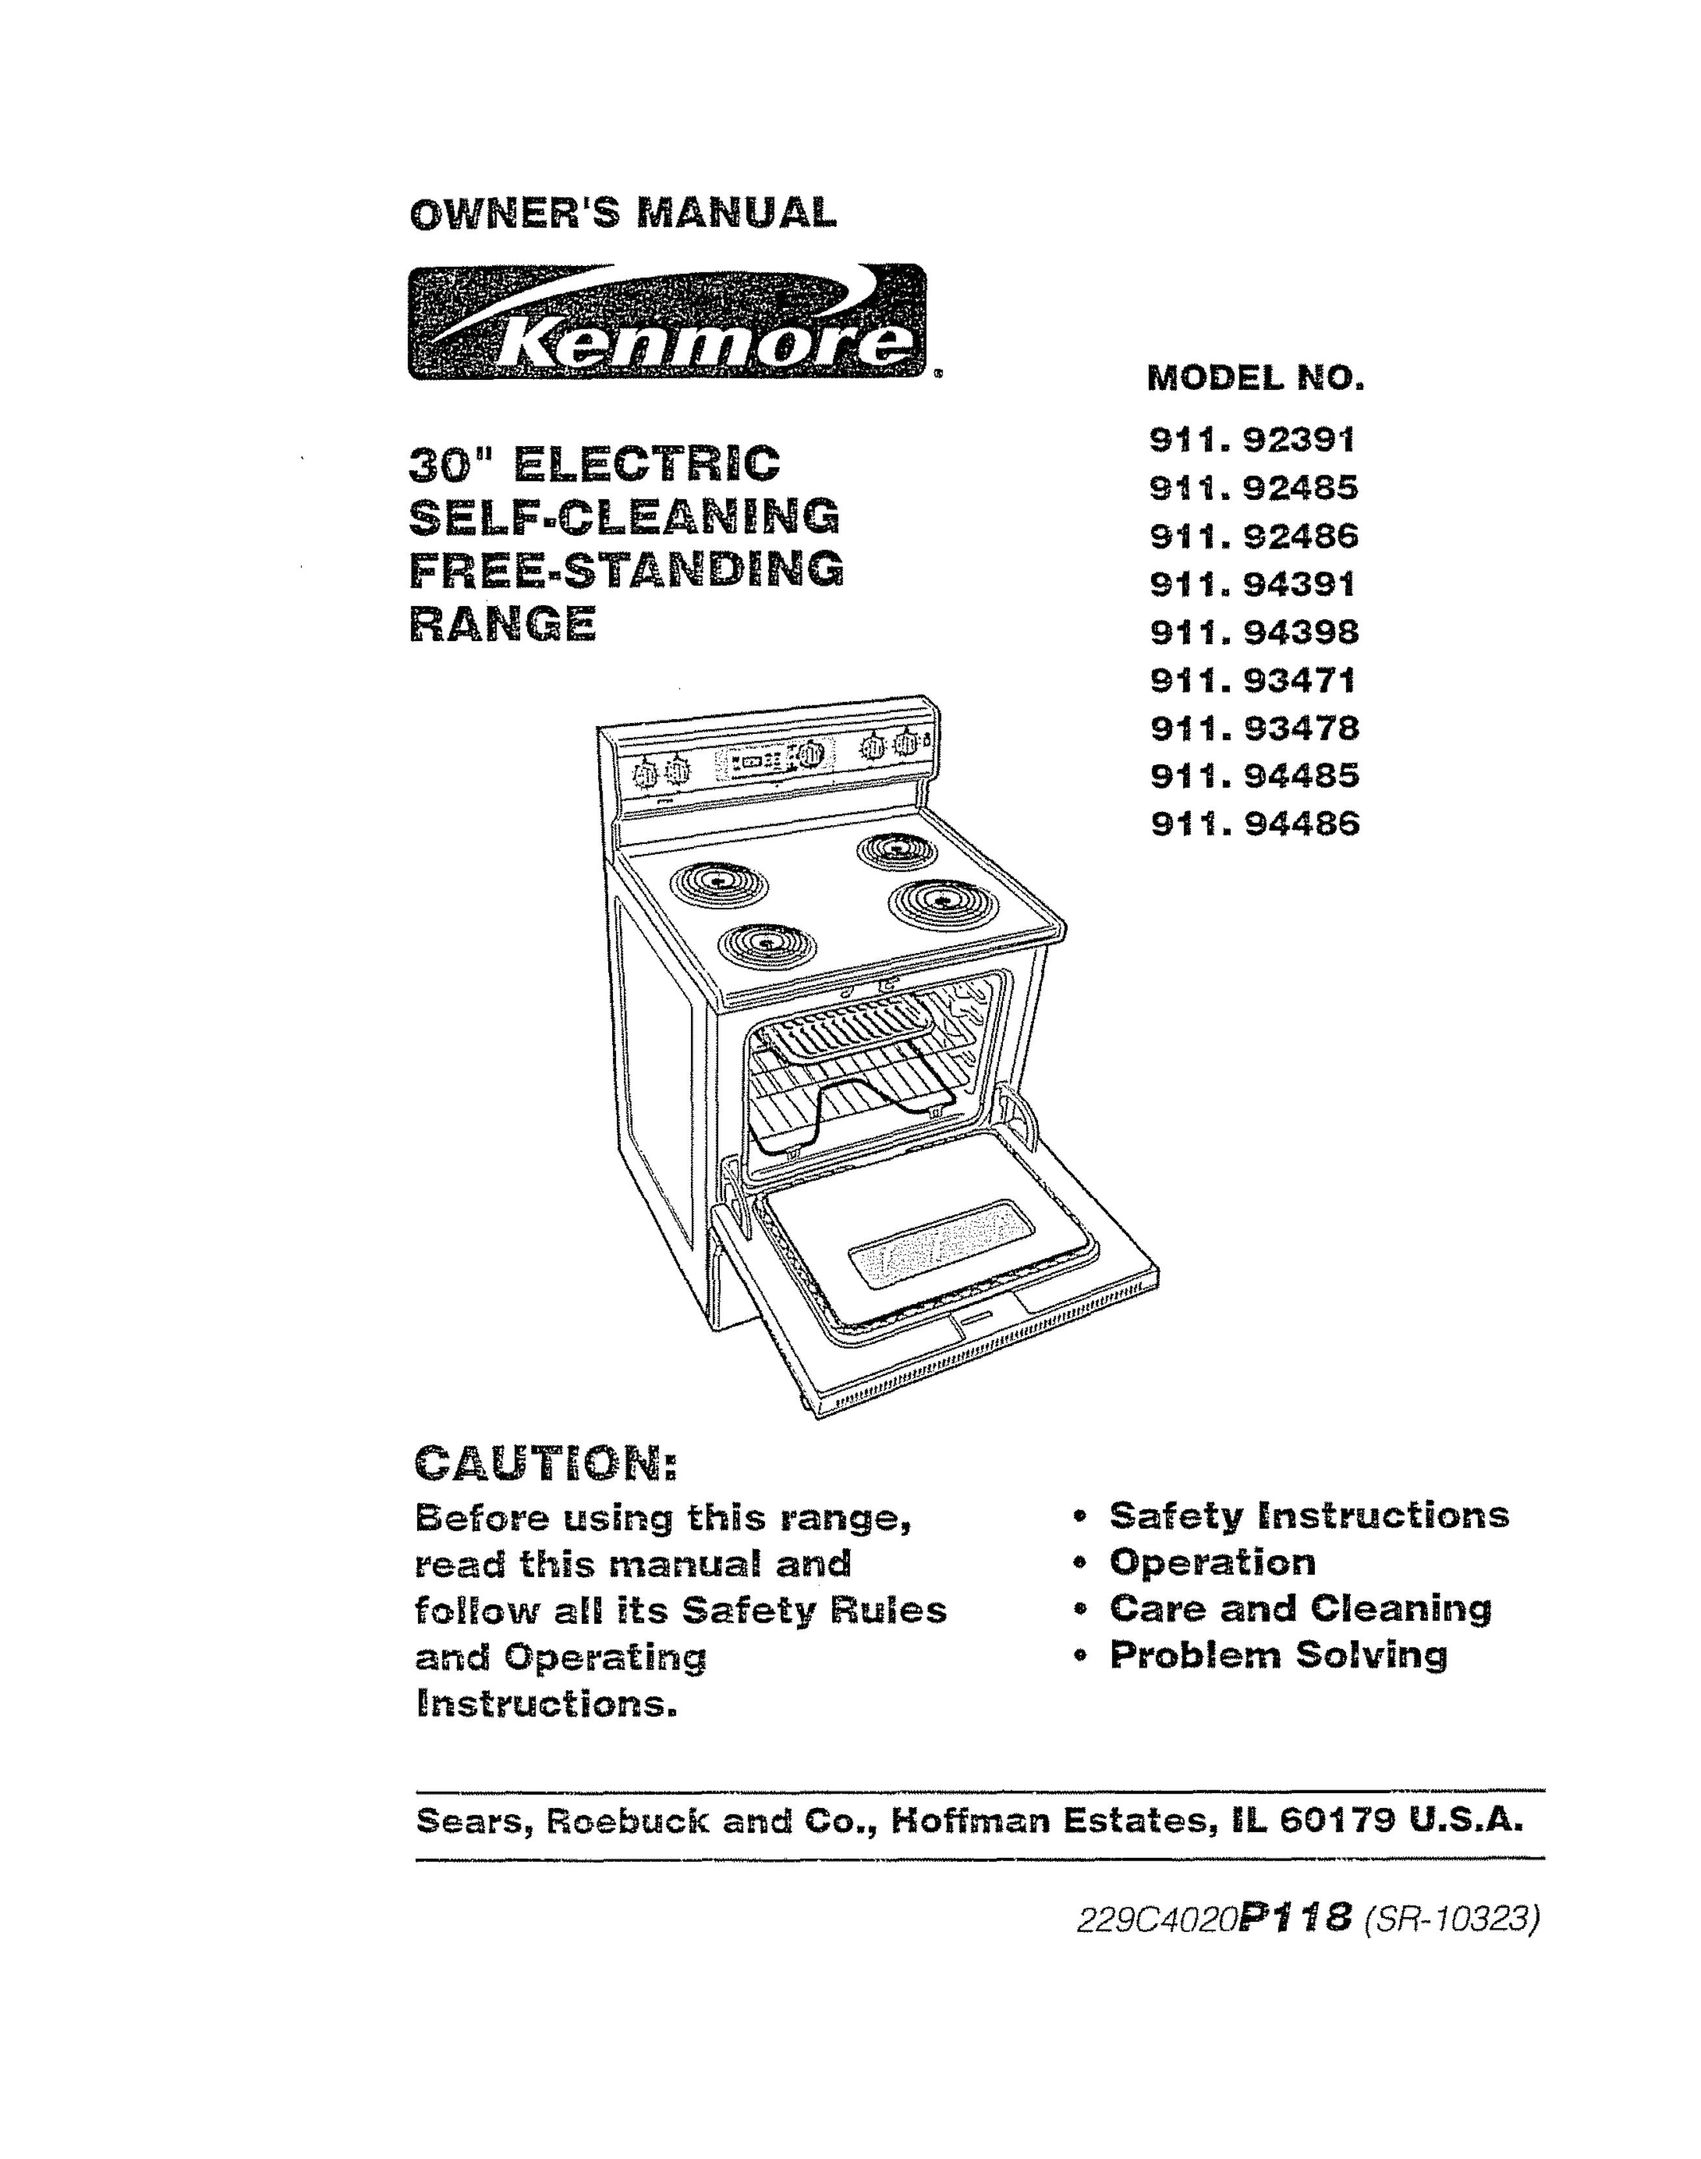 Kenmore 911.92485 Oven User Manual